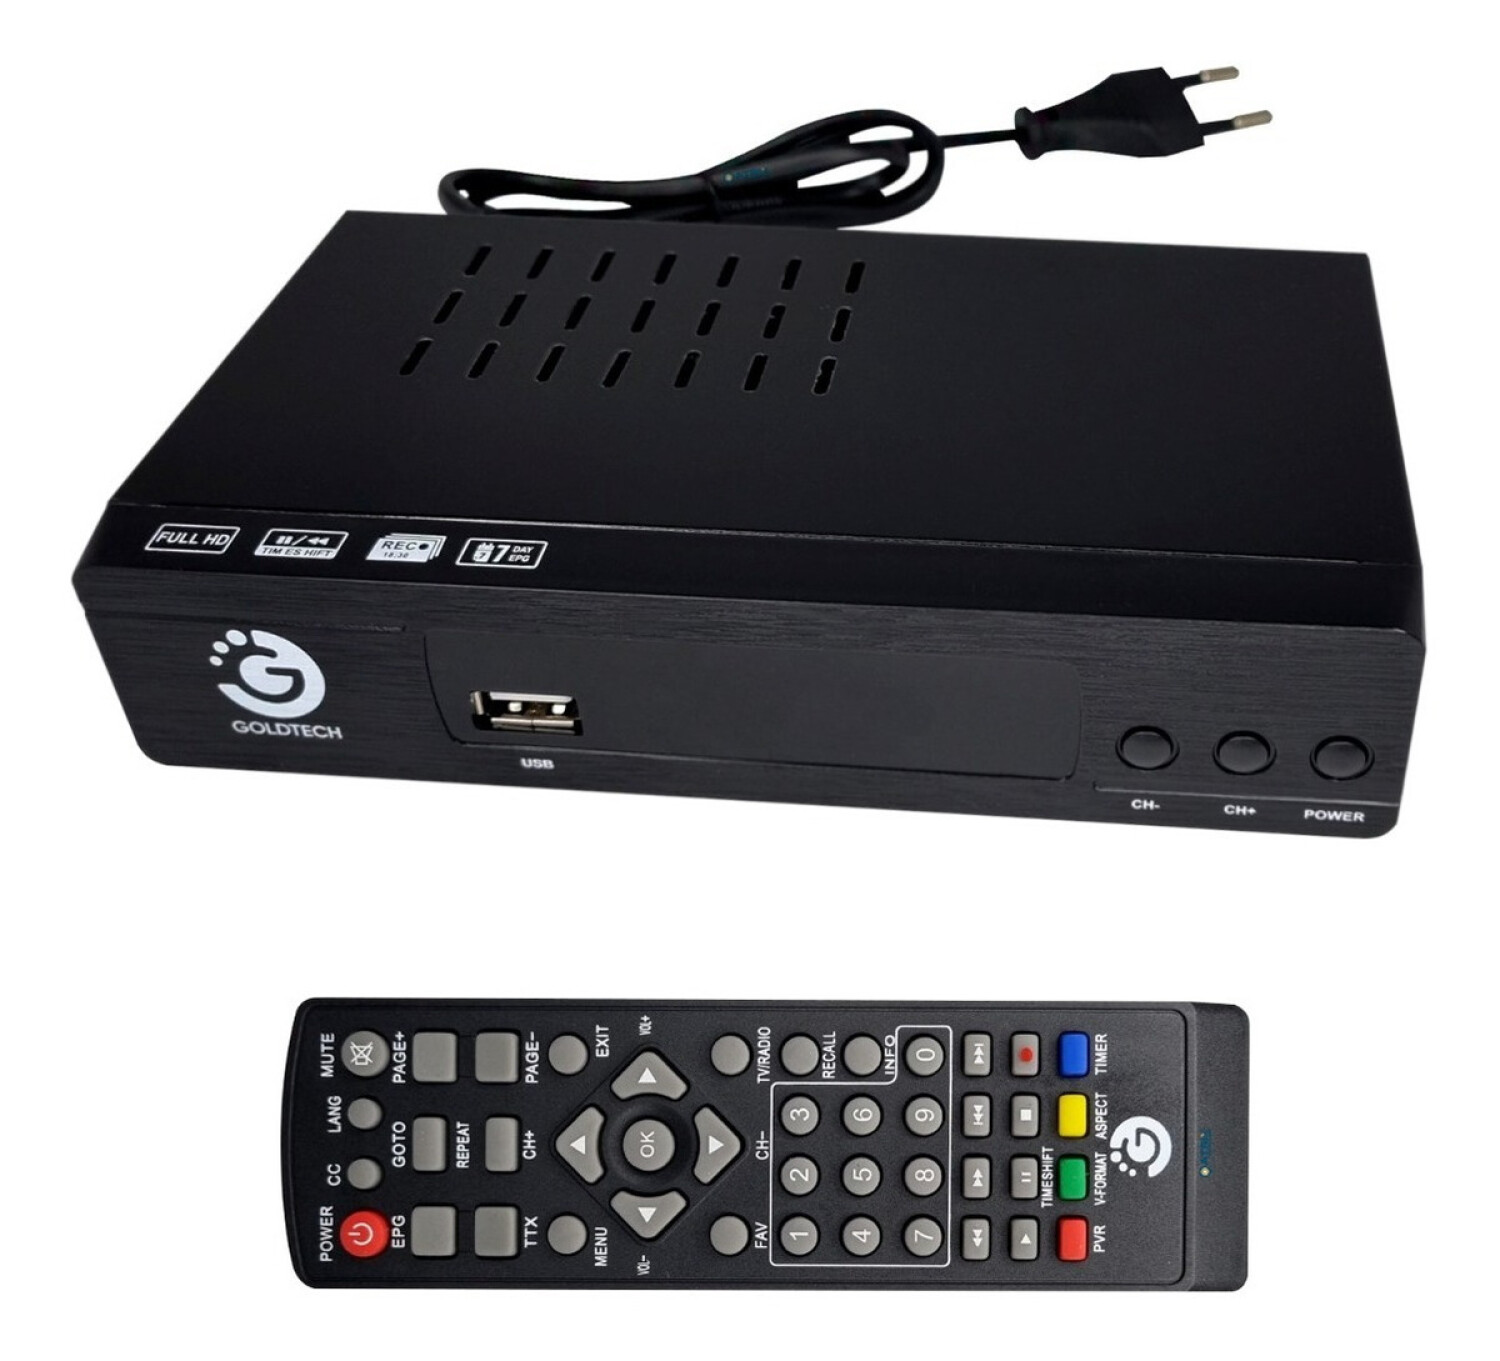 SINTONIZADOR DE TV DIGITAL ISDB-T HDMI / RCA USB CON CONTROL REMOTO